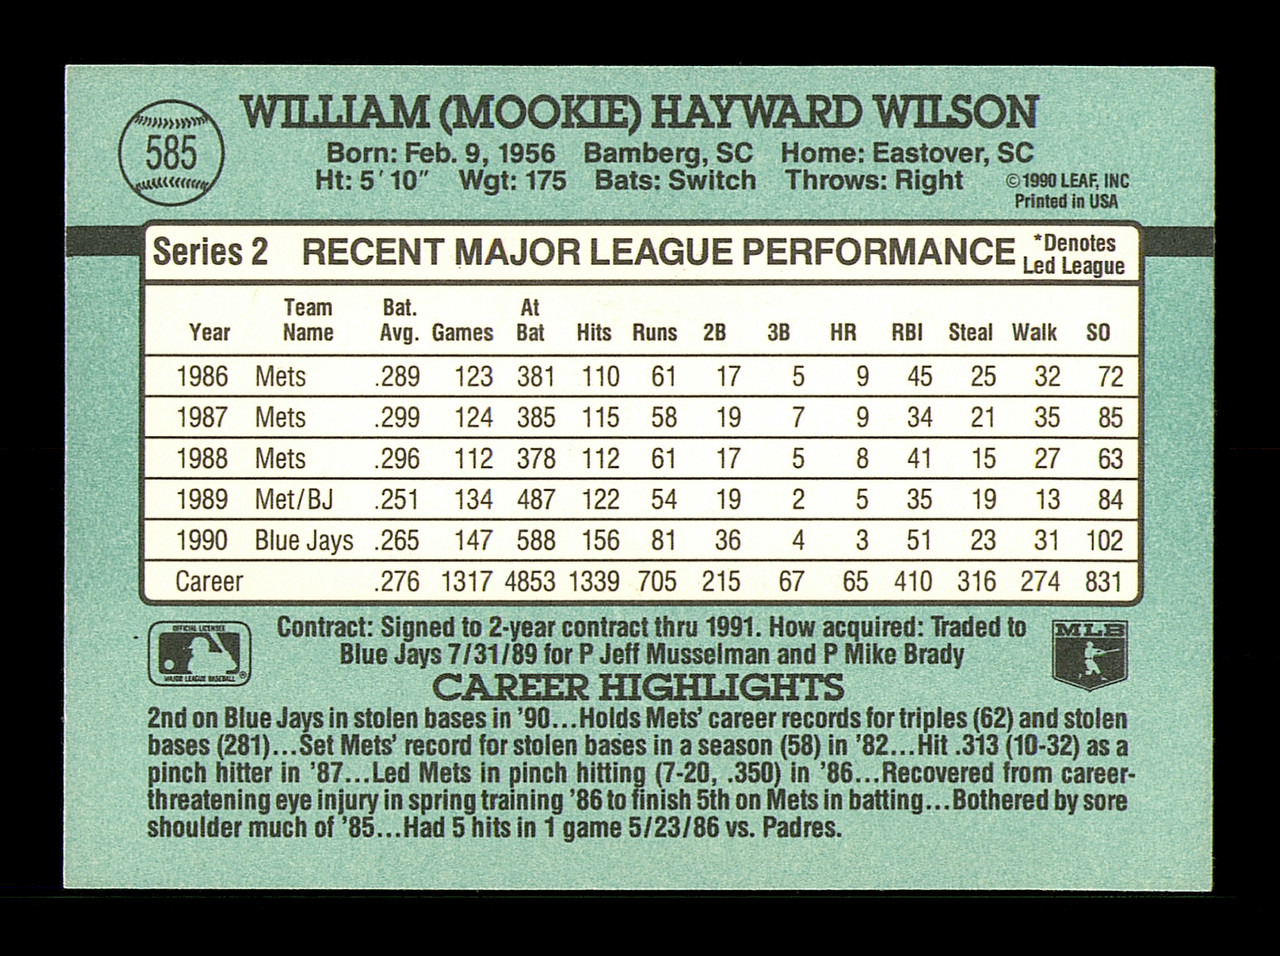 Mookie Wilson Autographed 1991 Donruss Card #585 Toronto Blue Jays SKU  #184488 - Mill Creek Sports